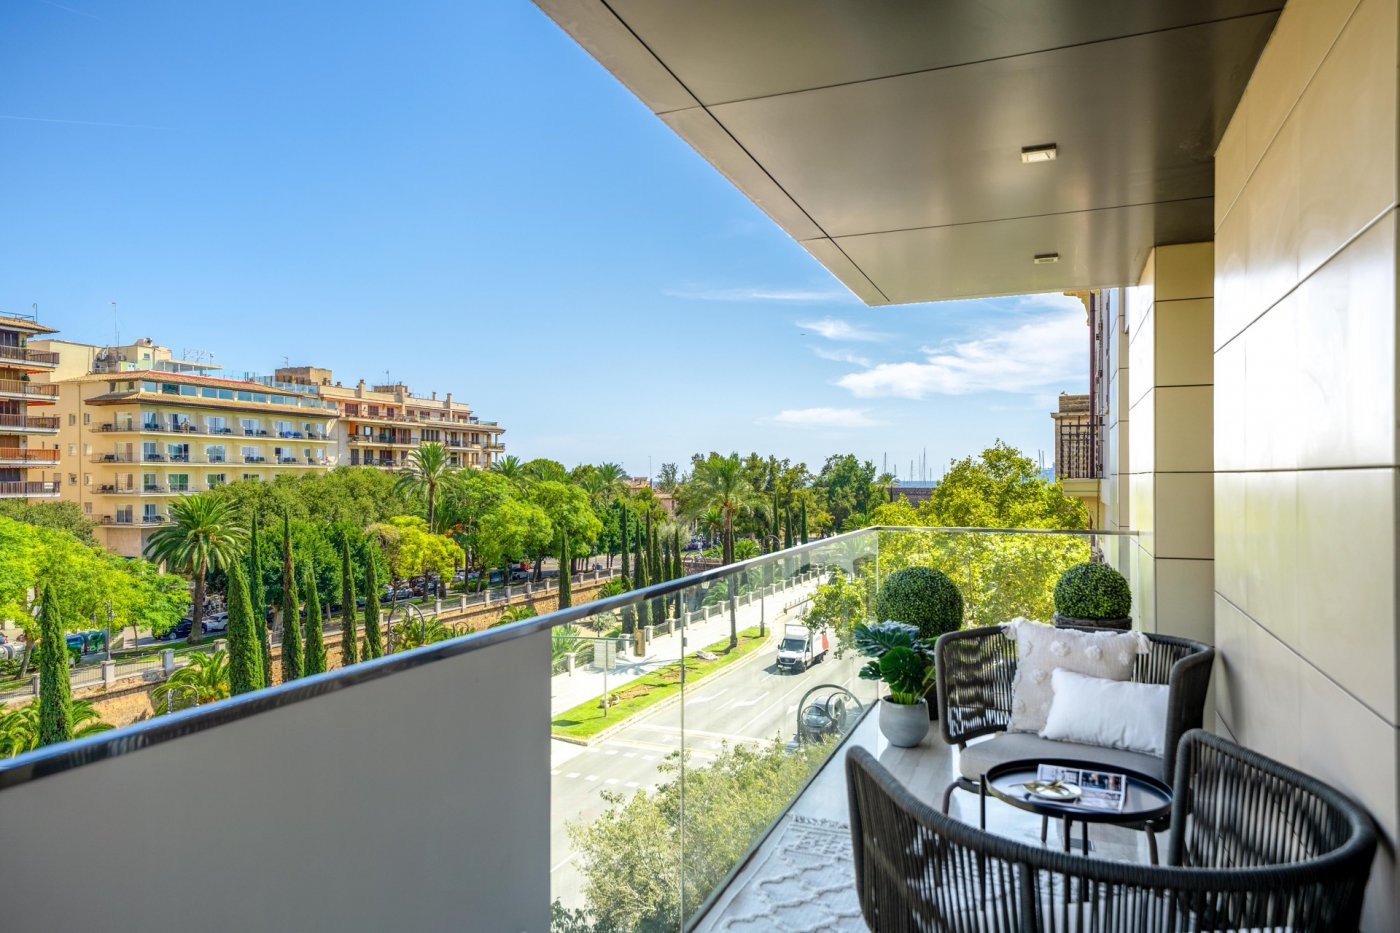 Elegancia llena de luz en este gran piso con terraza que se asoma al centro del Paseo Mallorca.